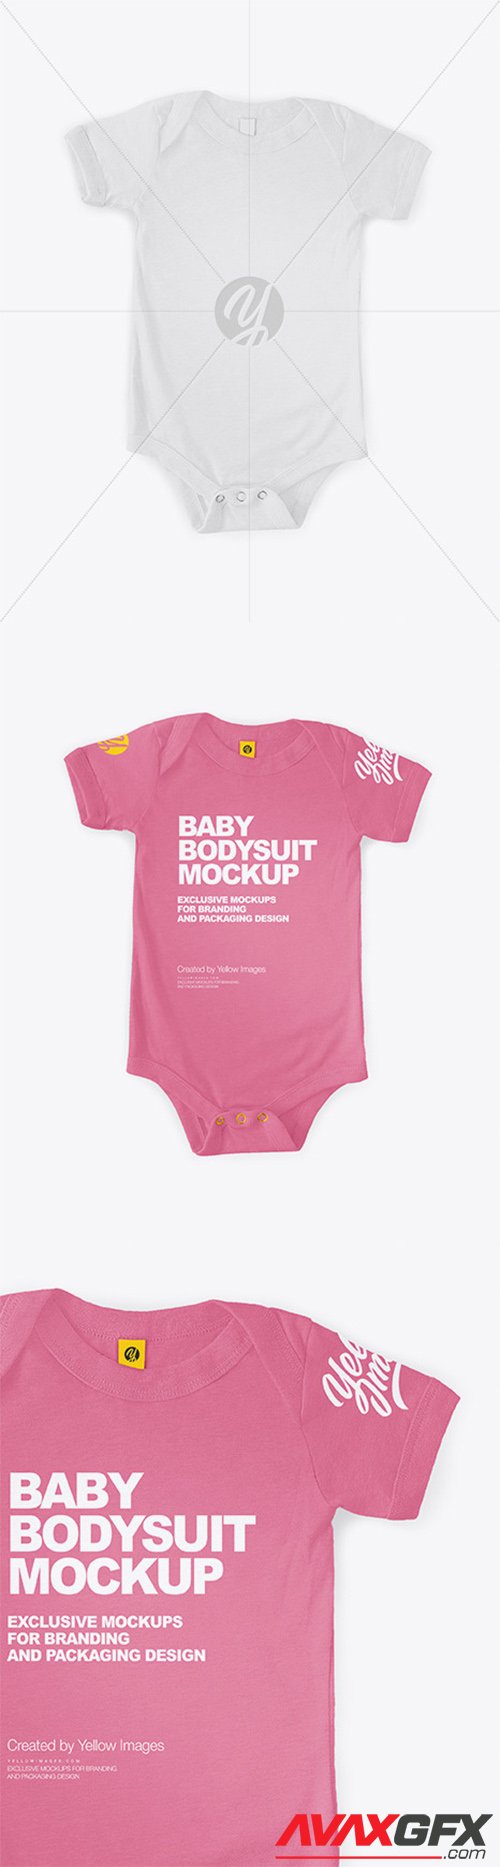 Baby Bodysuit Mockup 65396